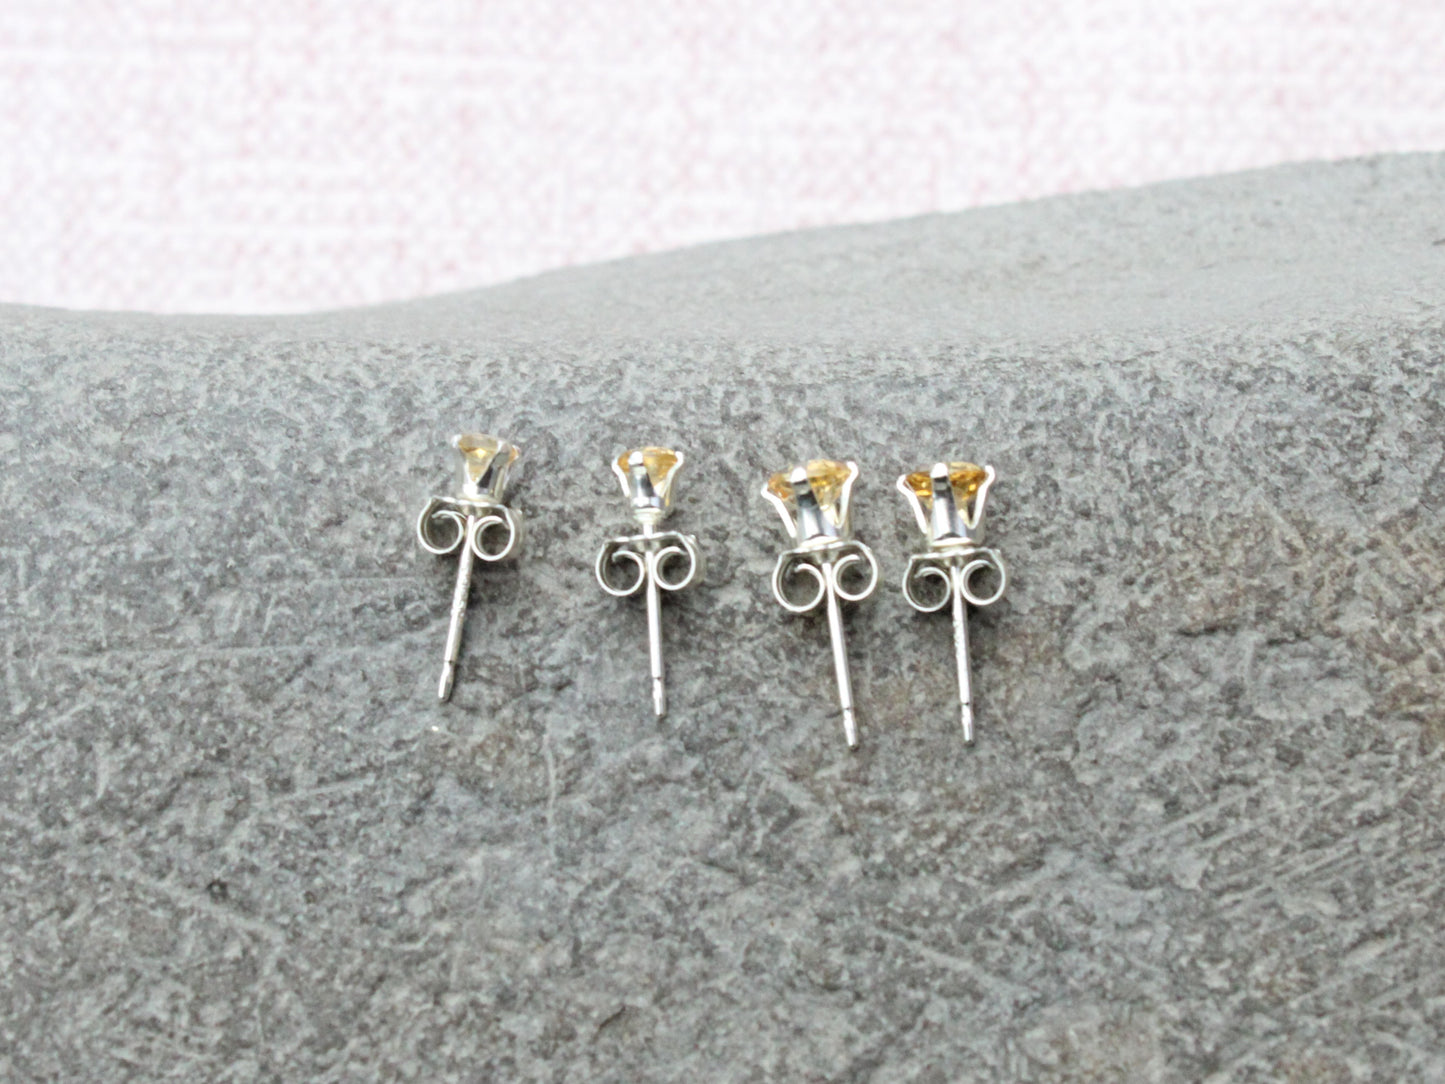 Citrine stud earrings in sterling silver or gold.